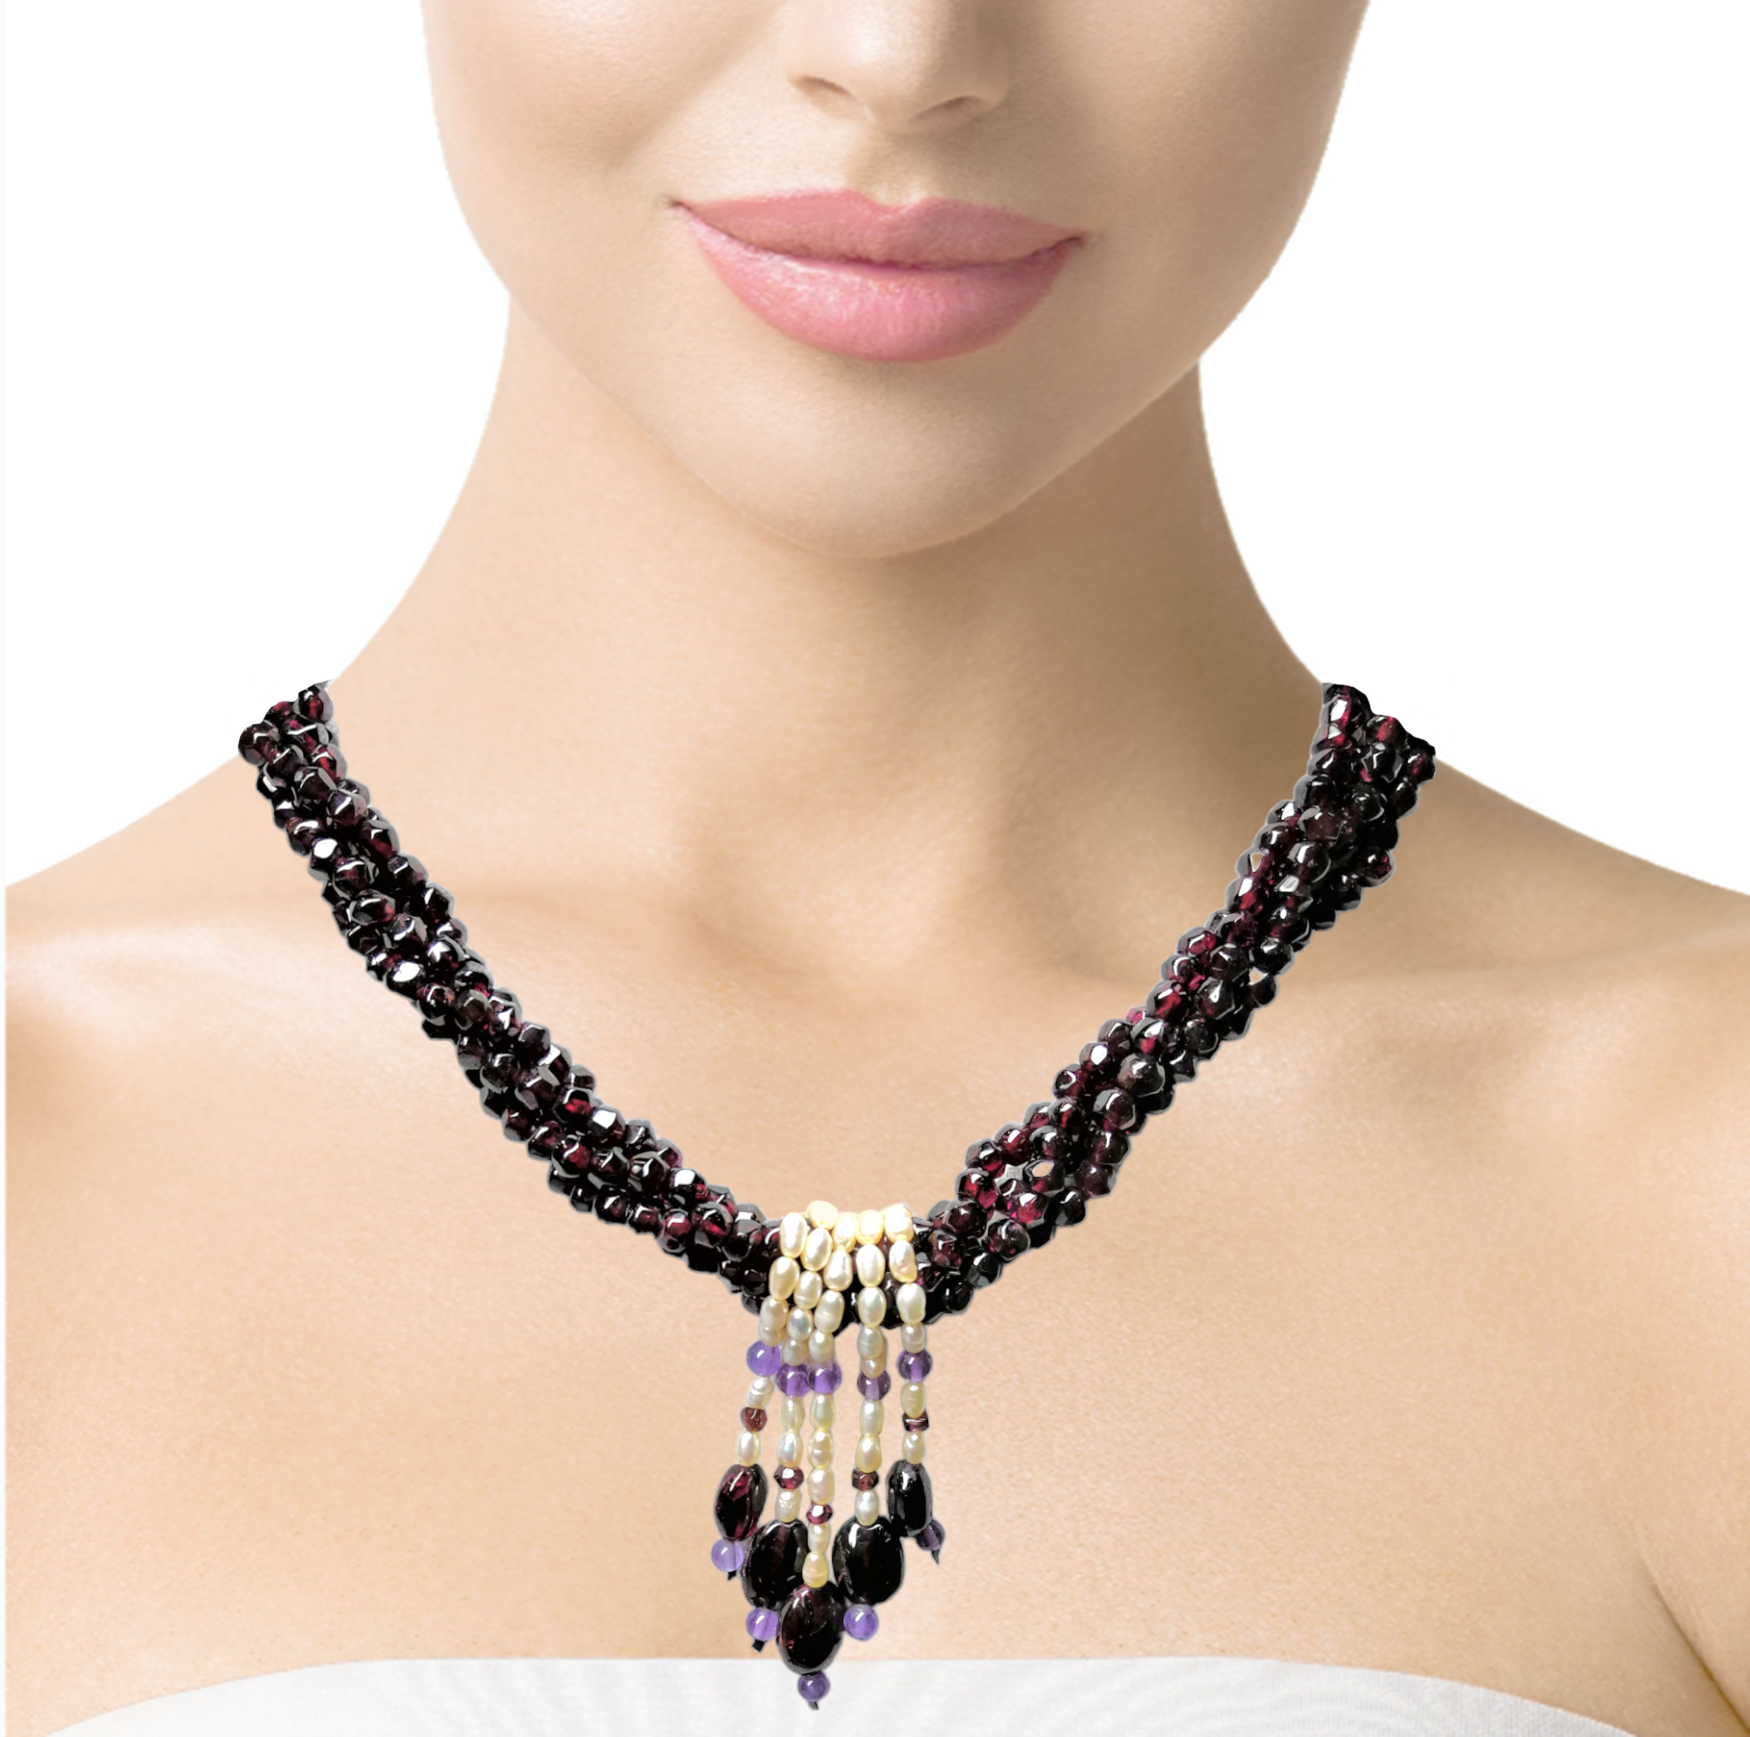 Natural Handmade Necklace 16"-18" Garnet, Pearls, Amethyst Gemstone Beads Jewellery